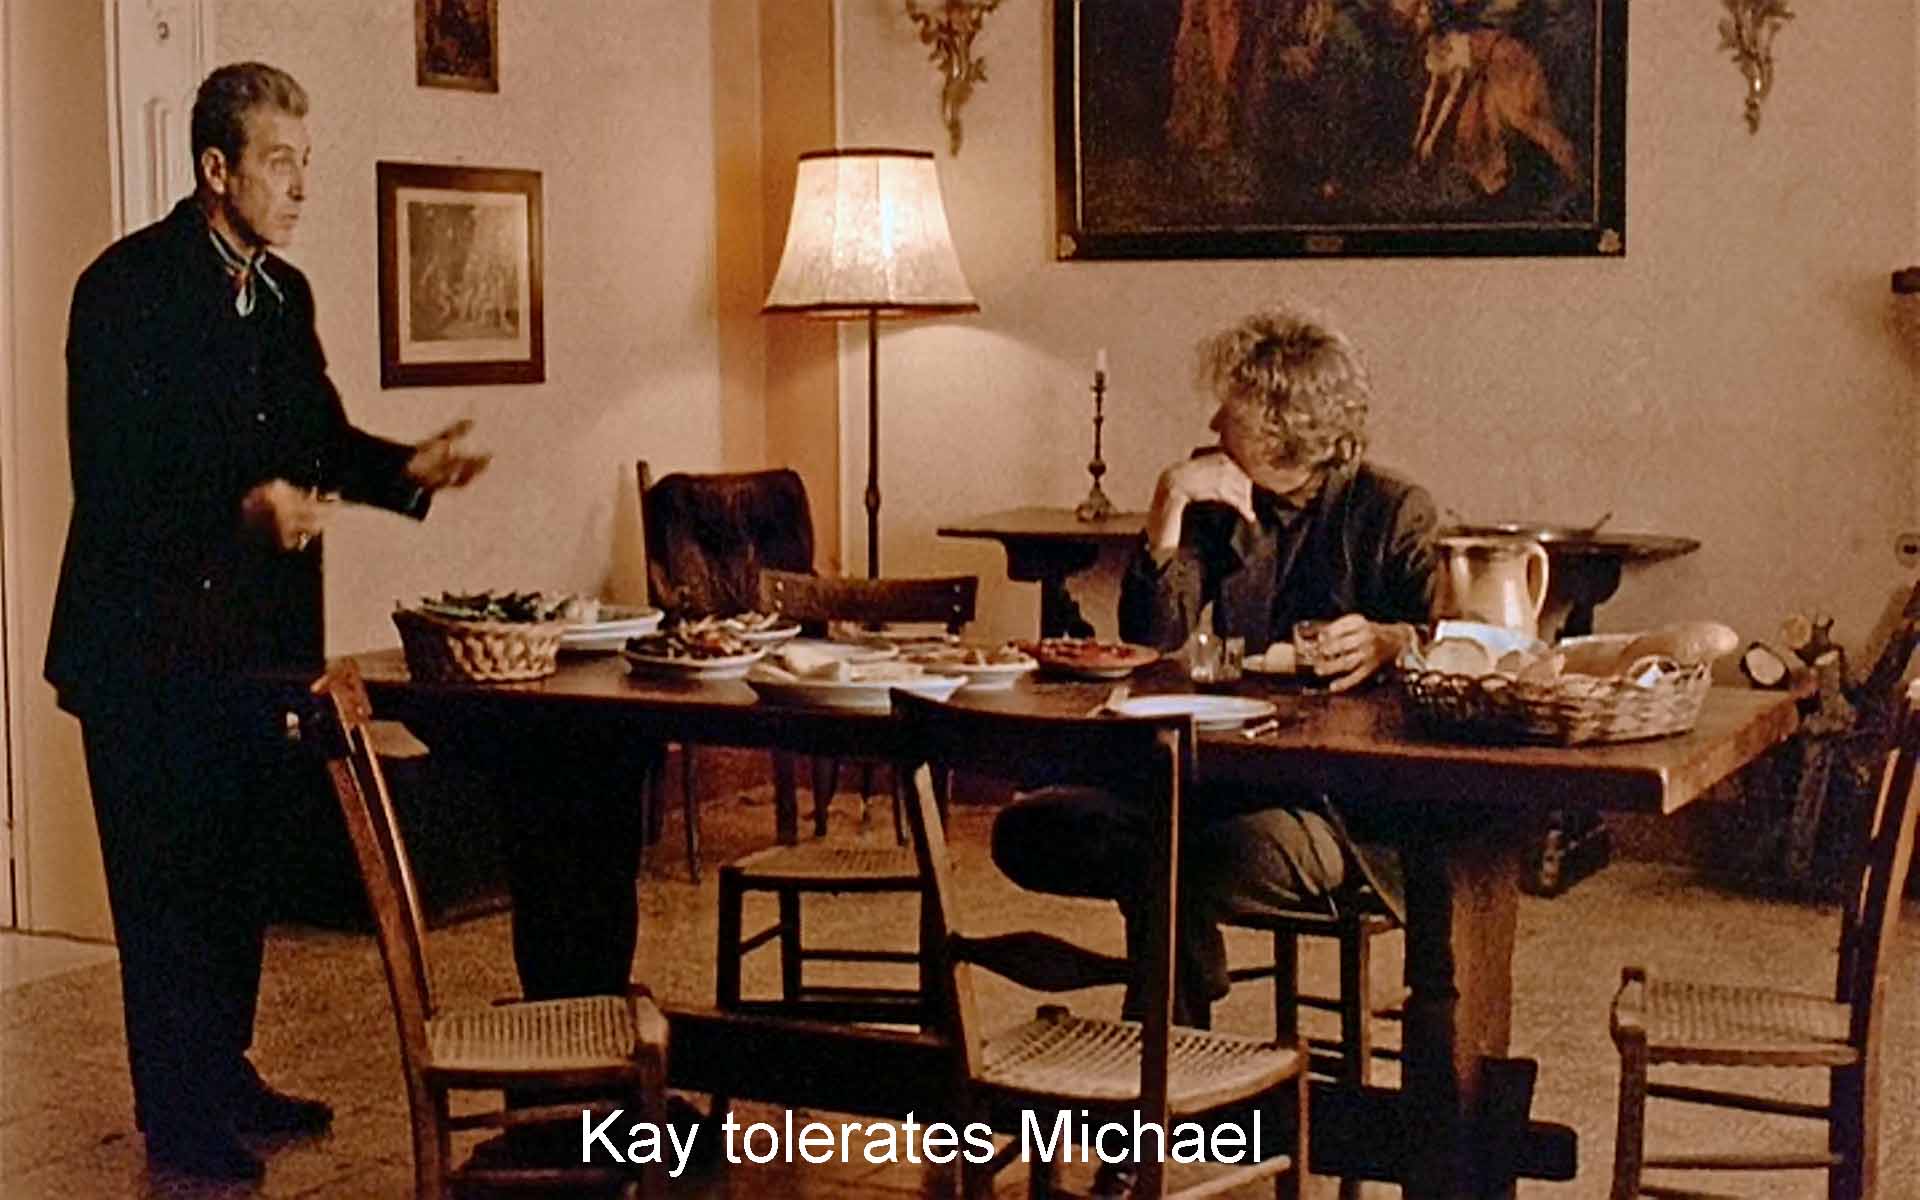 Kay tolerates Michael